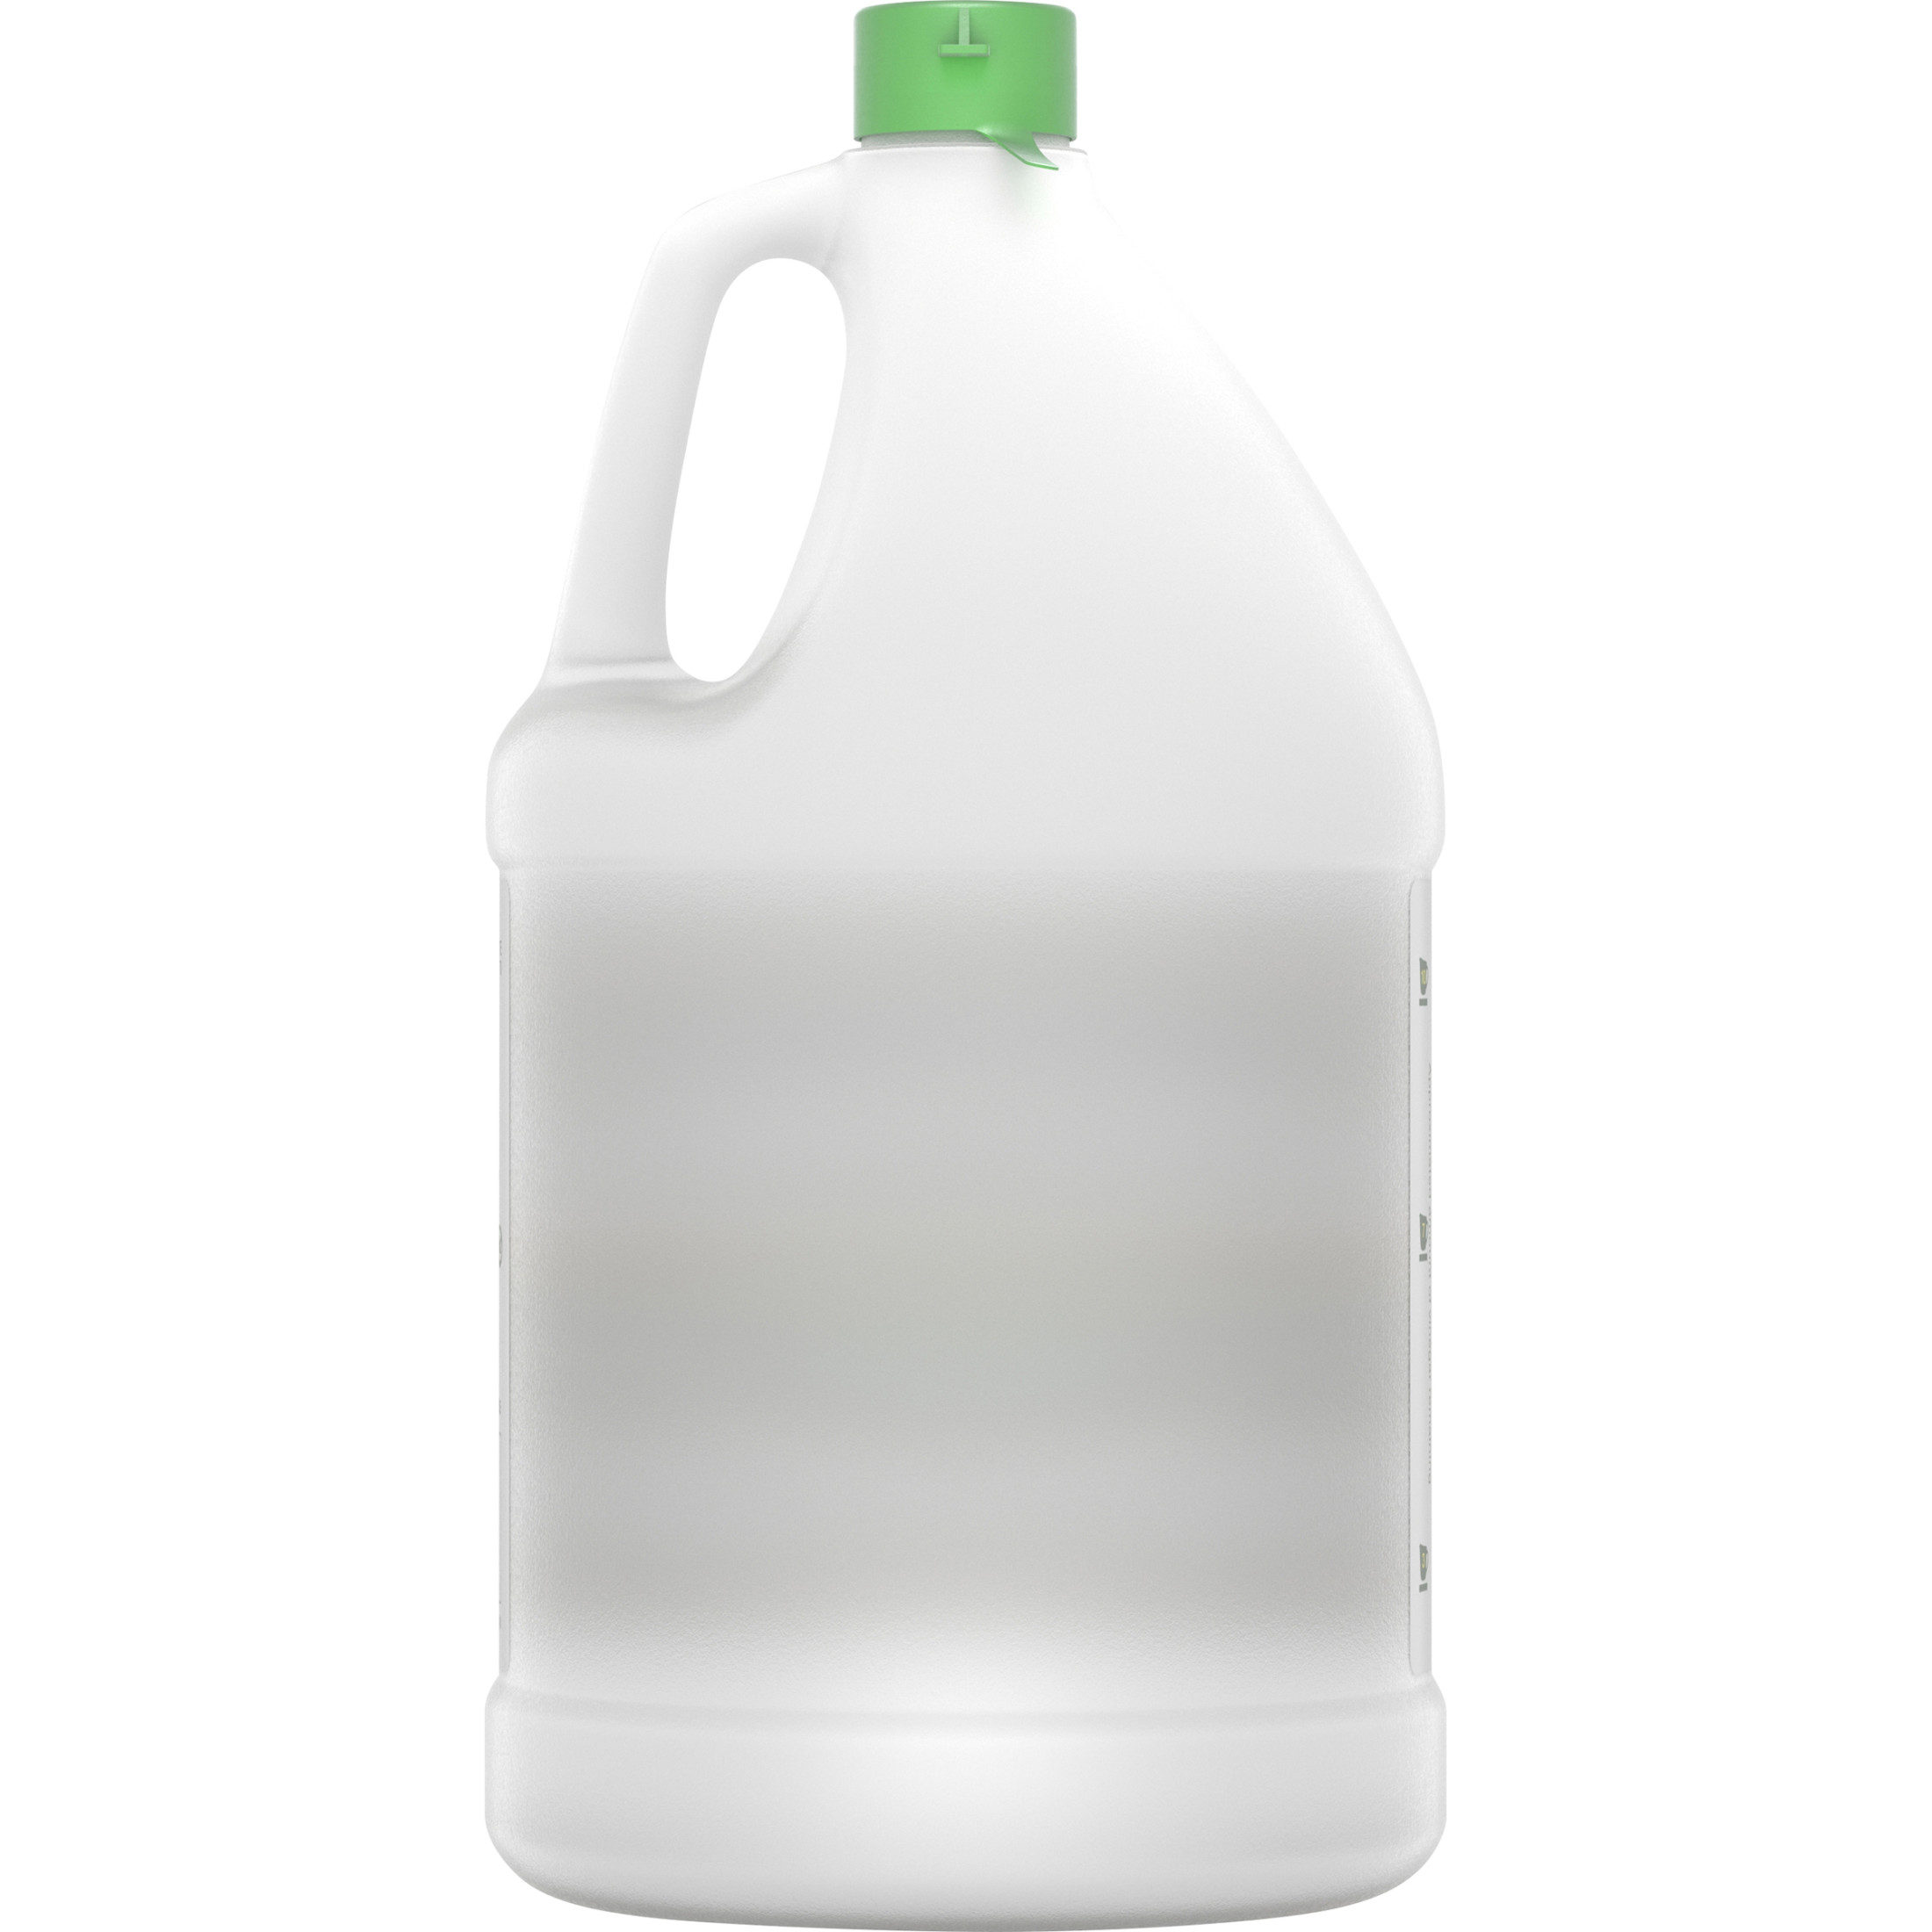 Heinz All Natural Distilled White Vinegar 5% Acidity, 1 gal Jug - image 2 of 6